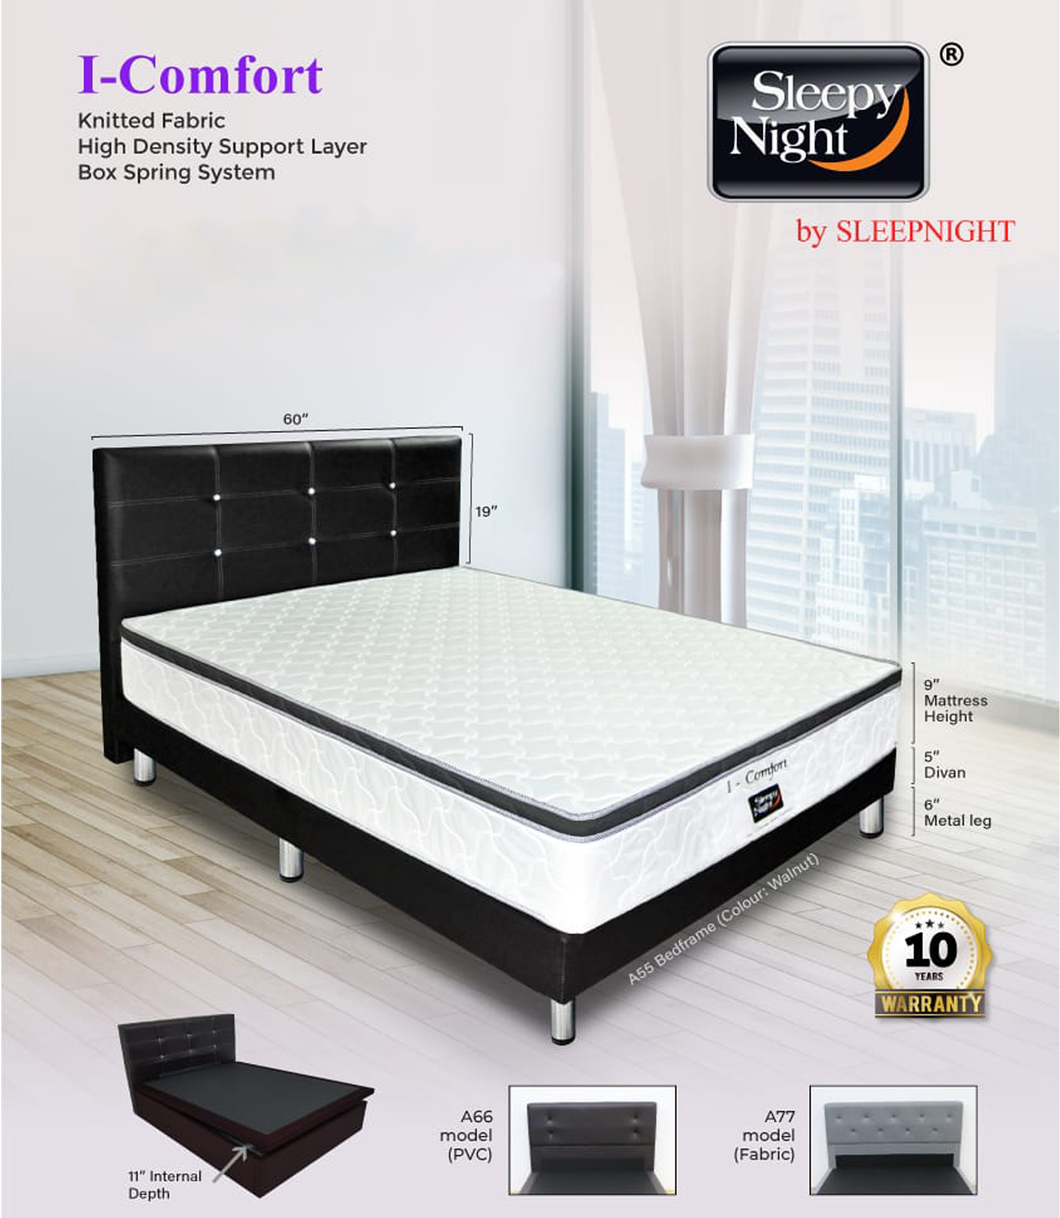 Sleepynight i-comfort spring mattress